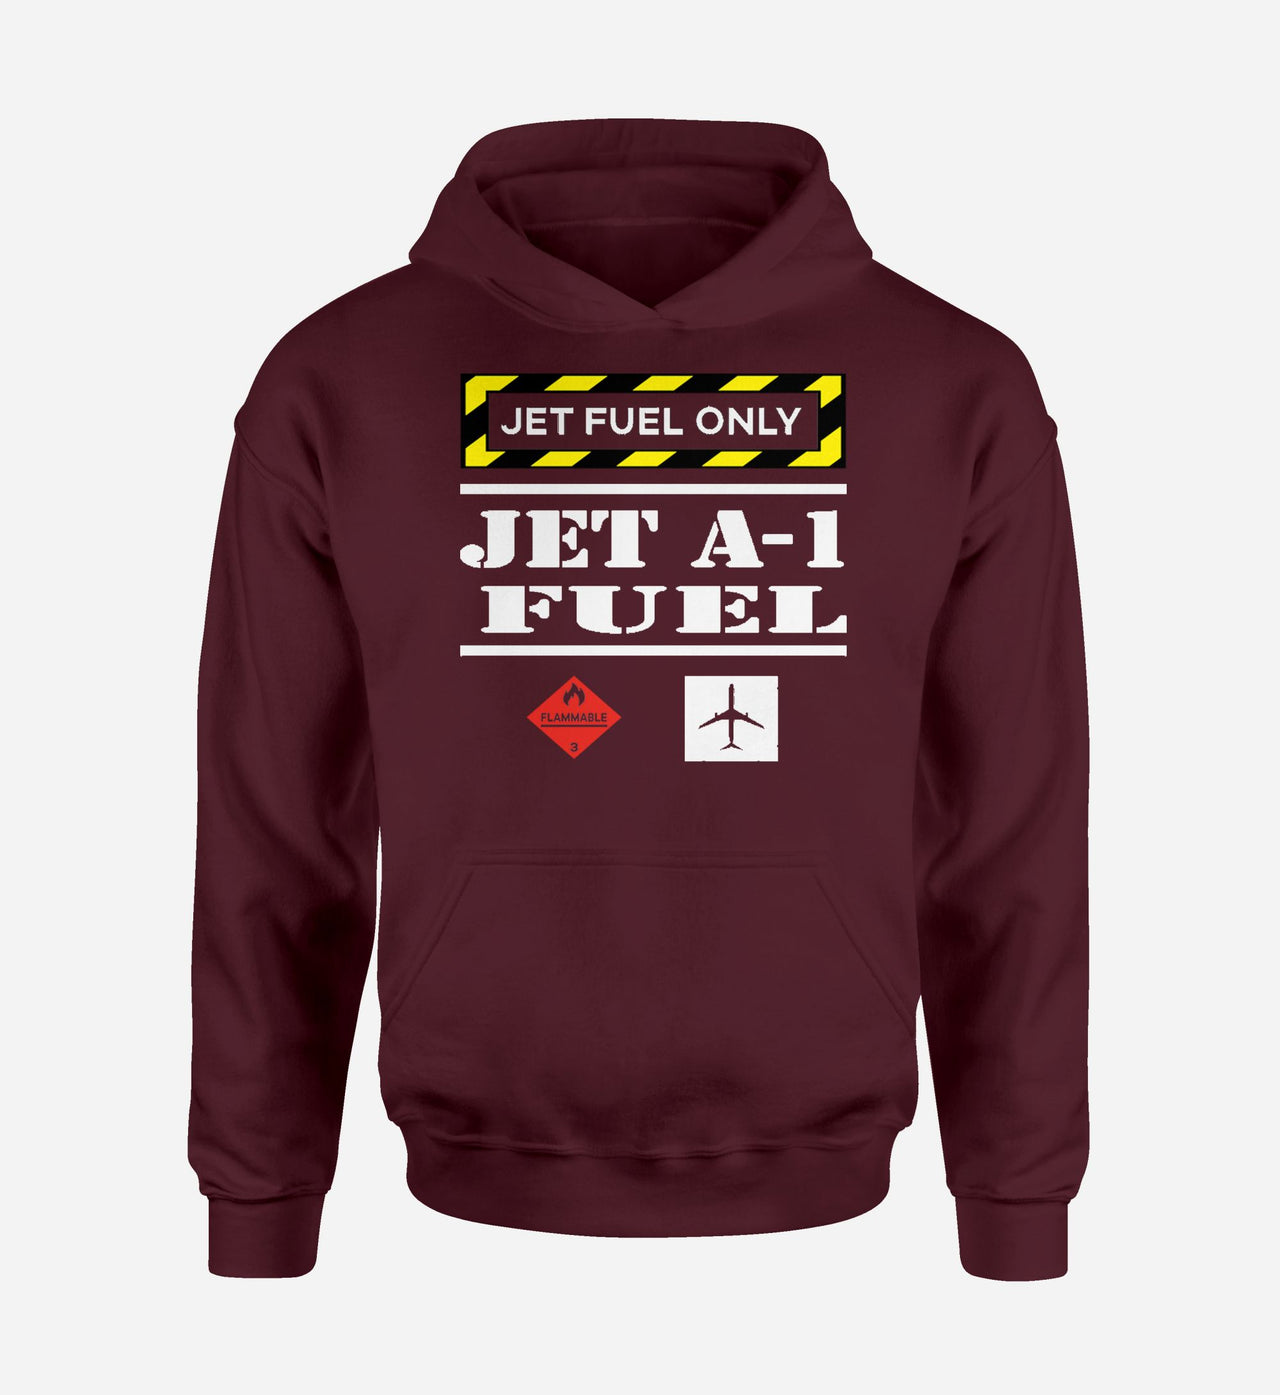 Jet Fuel Only Designed Hoodies